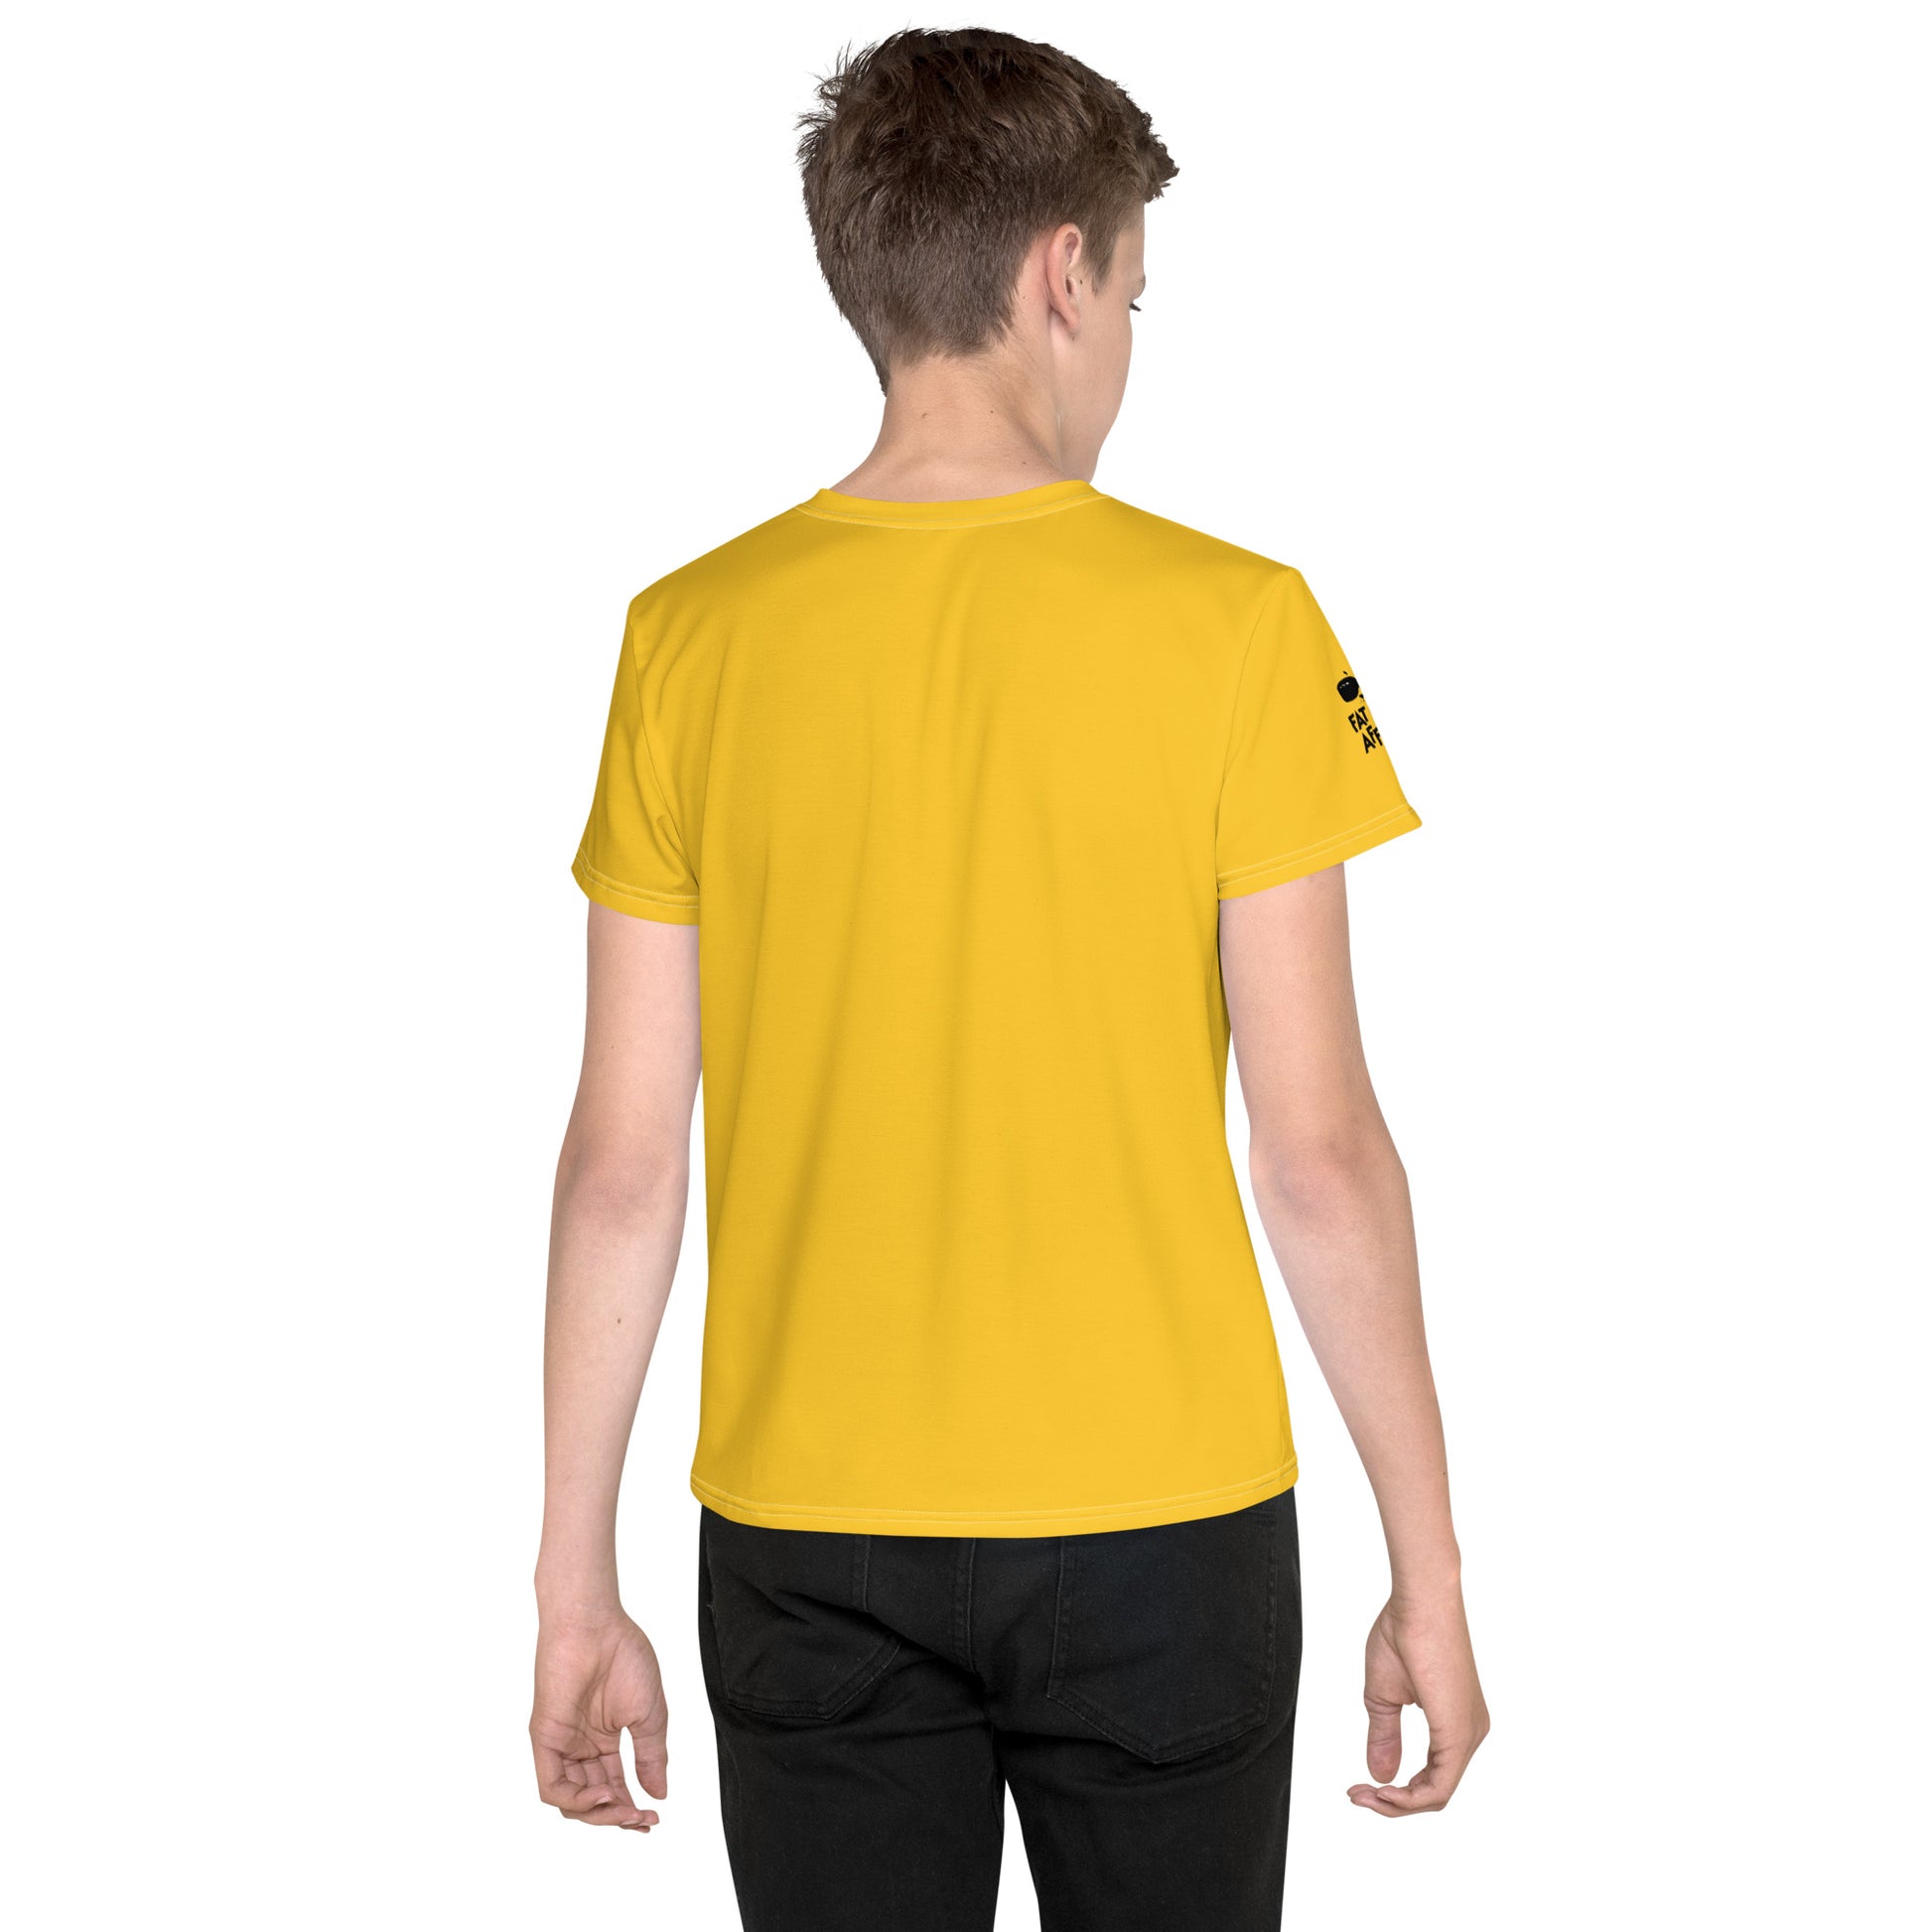 Yellow teen t shirt with cat design